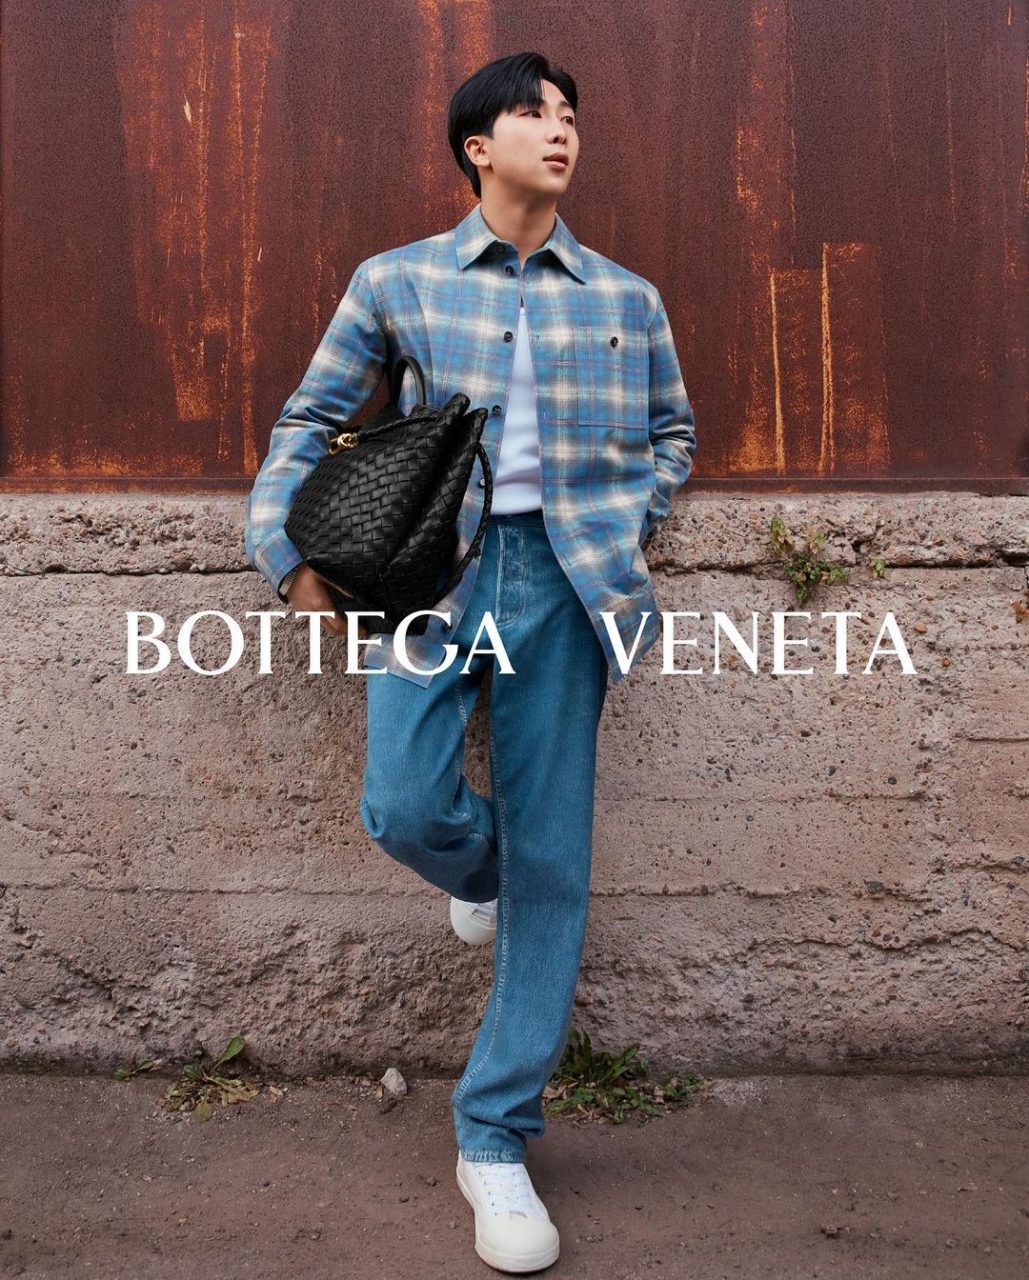 Bottega Veneta welcomes BTS' RM, Bandwagon